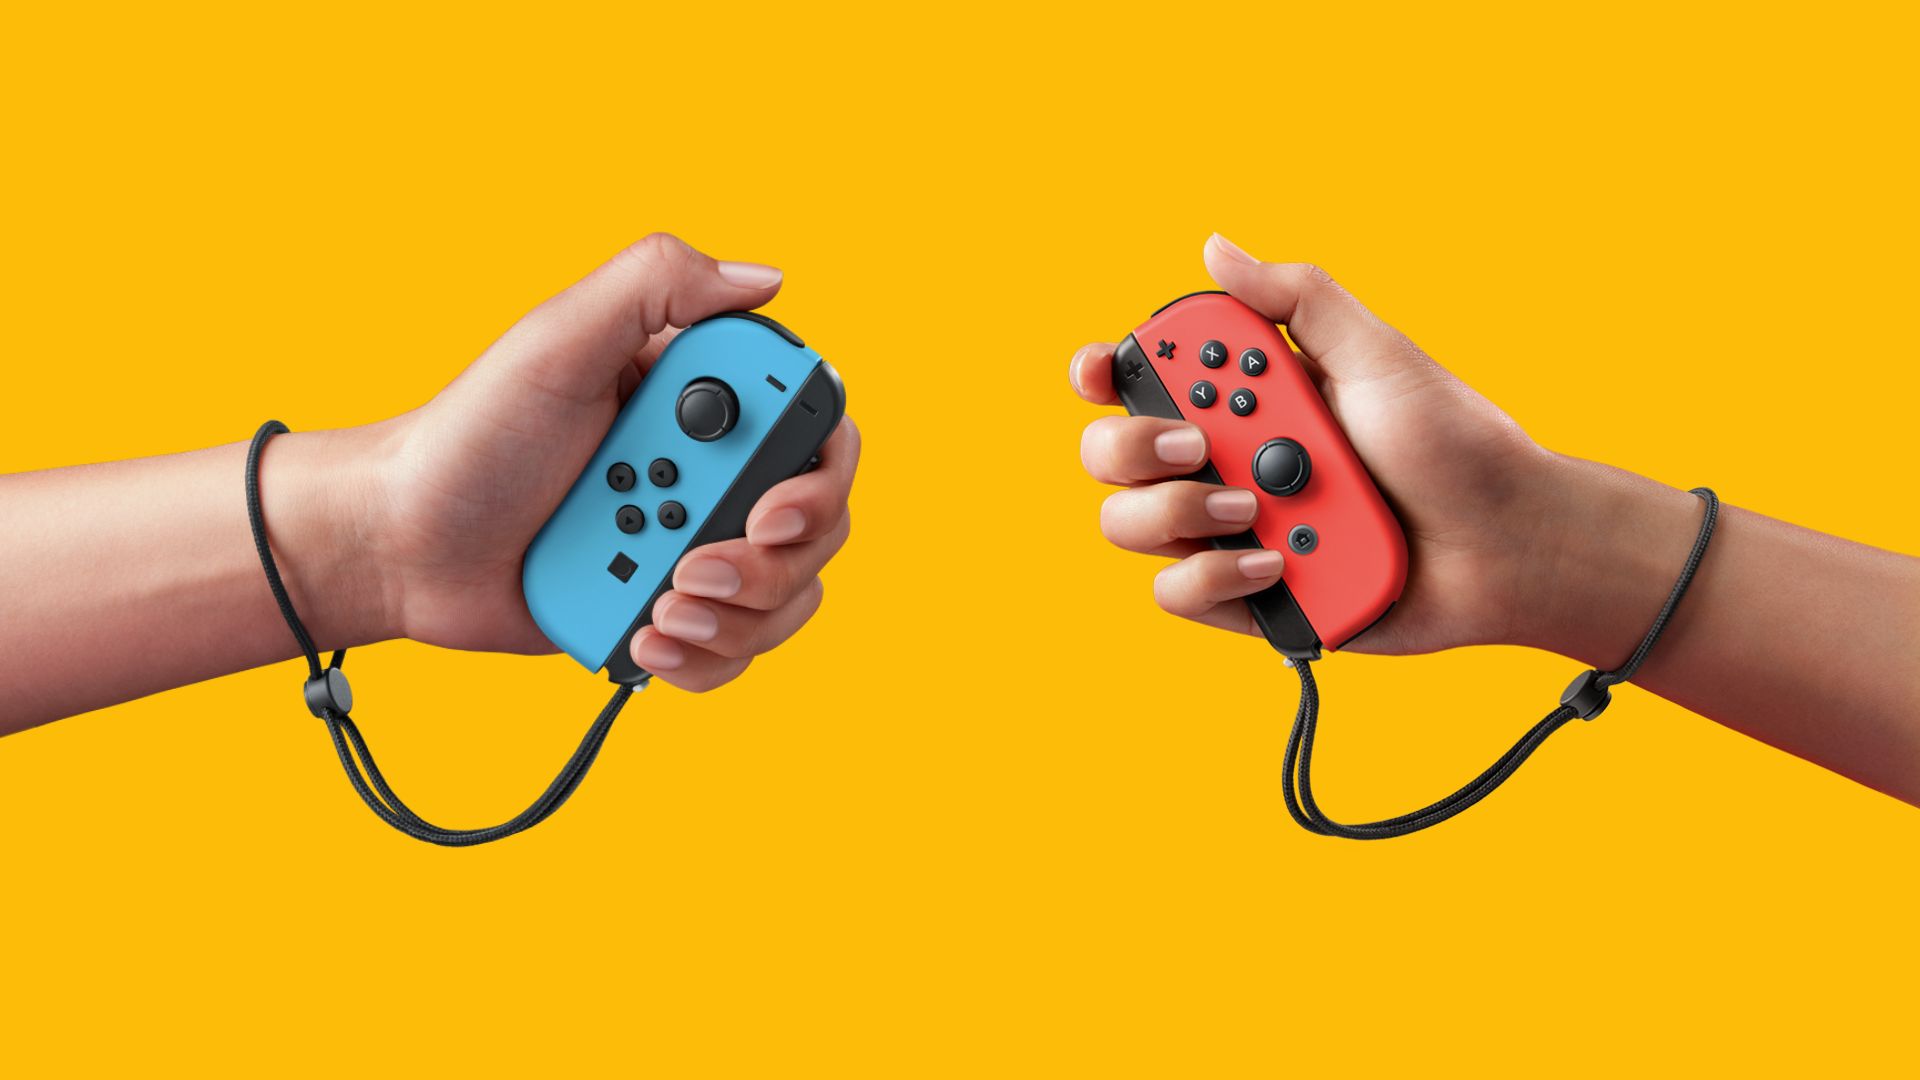 Design flaw” to blame Nintendo Switch Joy-Con drift | Pocket Tactics